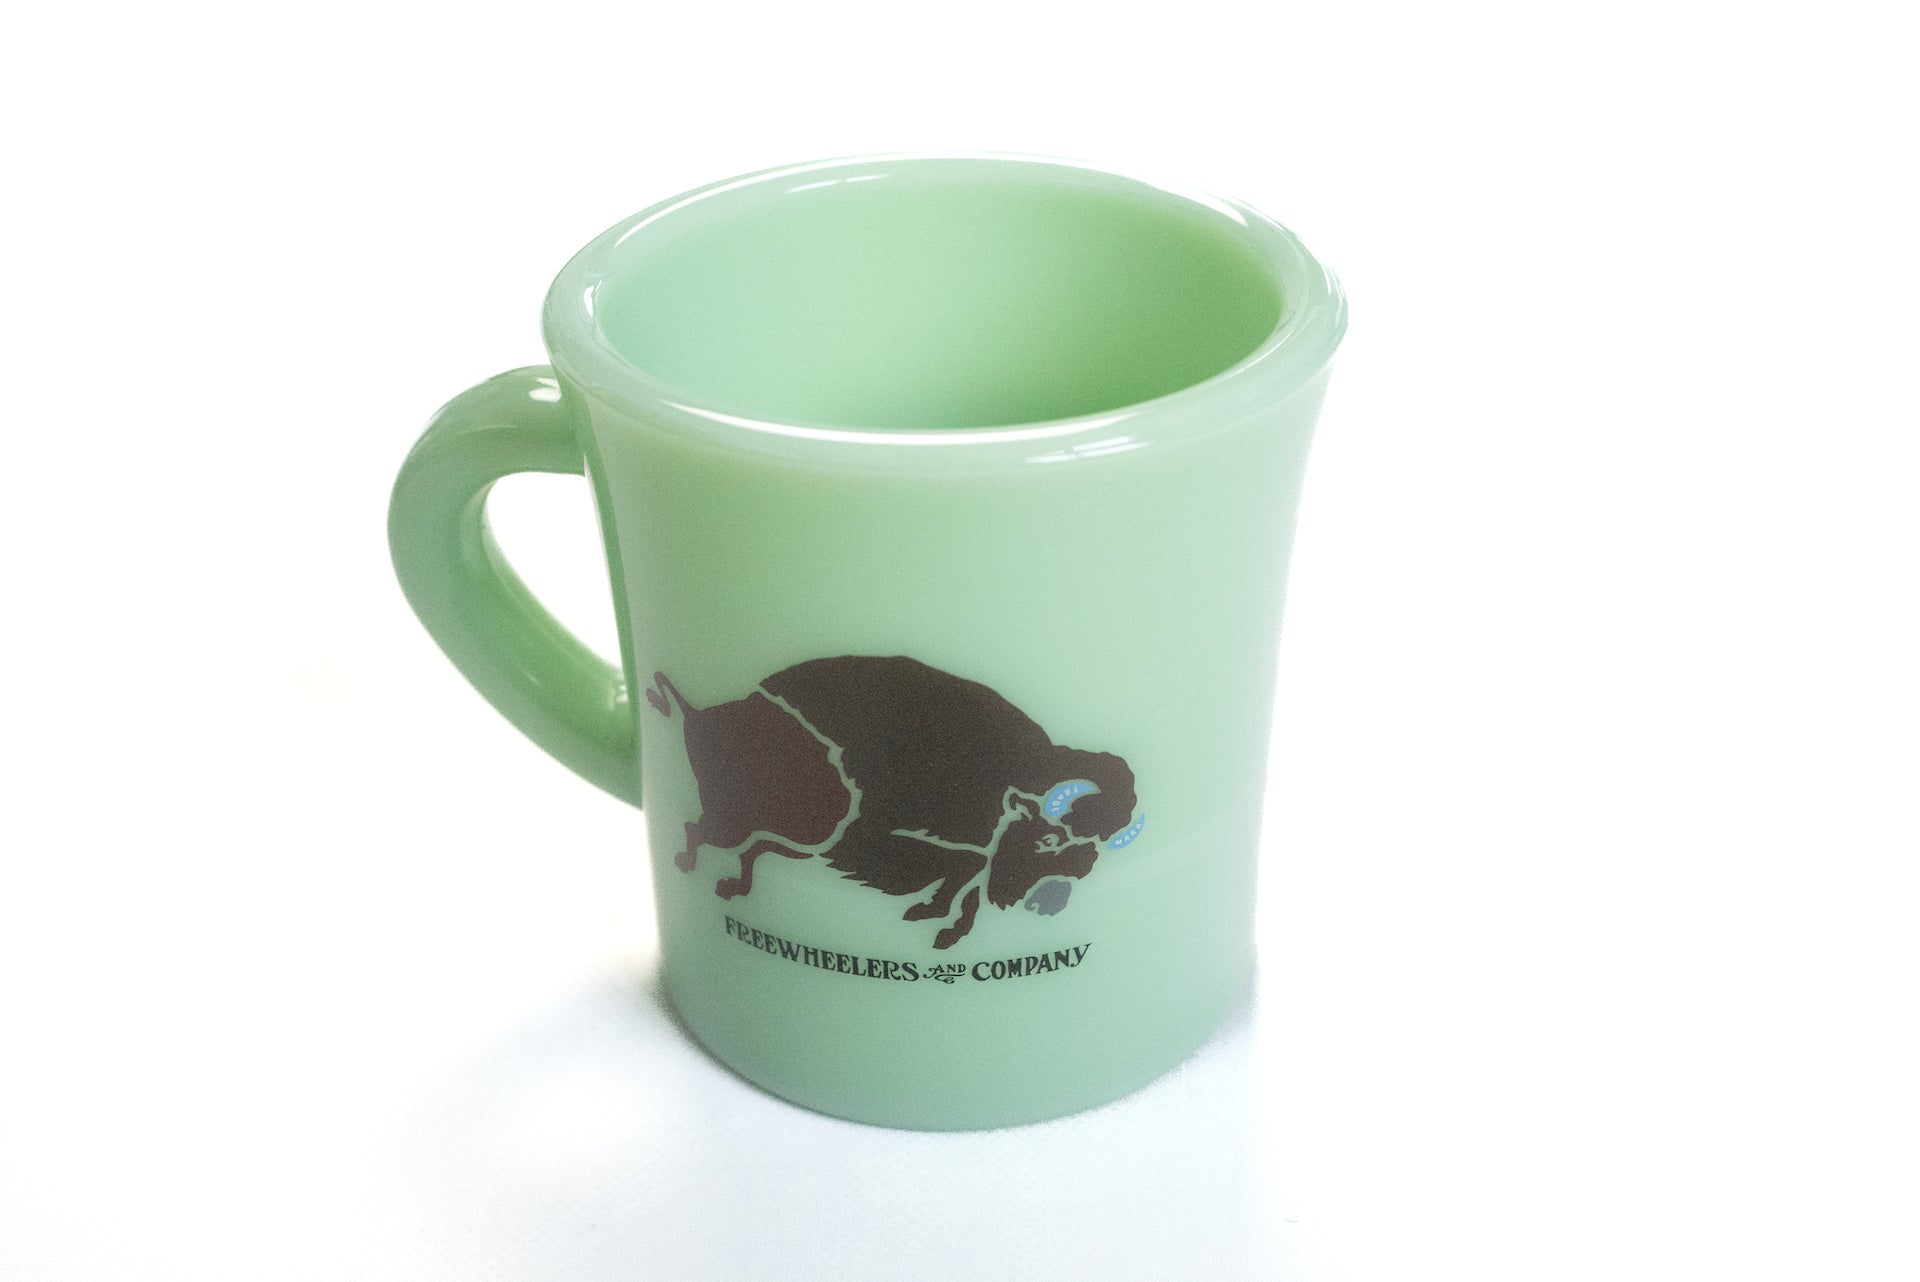 Freewheelers "Buffalo" Old Milk Glass Mug (Jade-Ite)